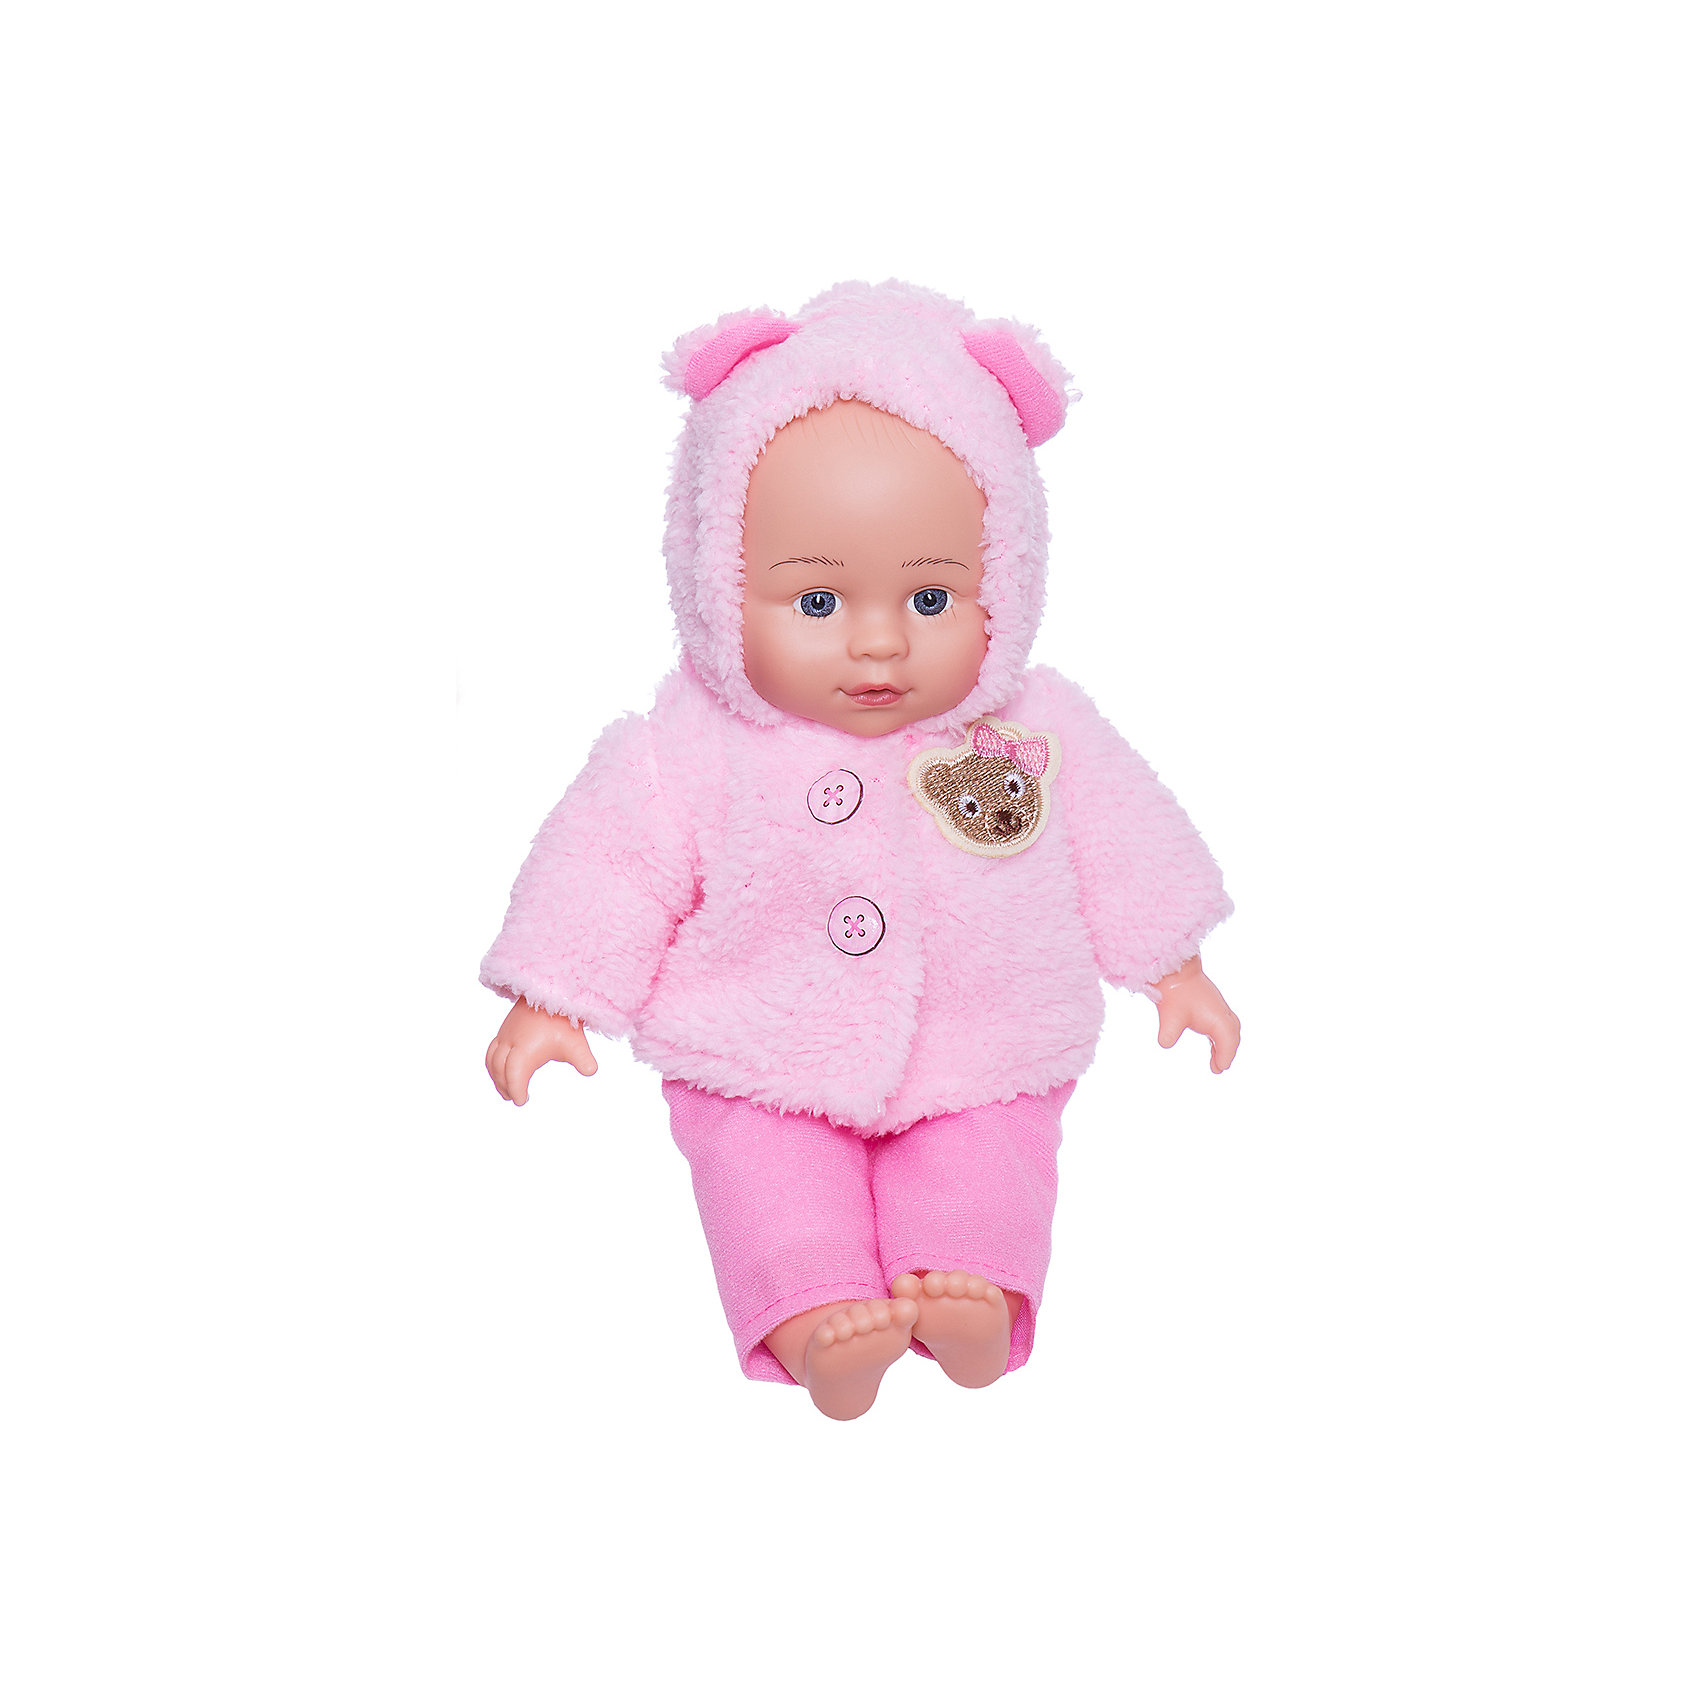 Boutique 33. Кукла мягконабивная ABTOYS. Кукла "Baby Boutique", 42 см. Пупс в розовом костюме. Пупс с аксессуарами, 33 см.